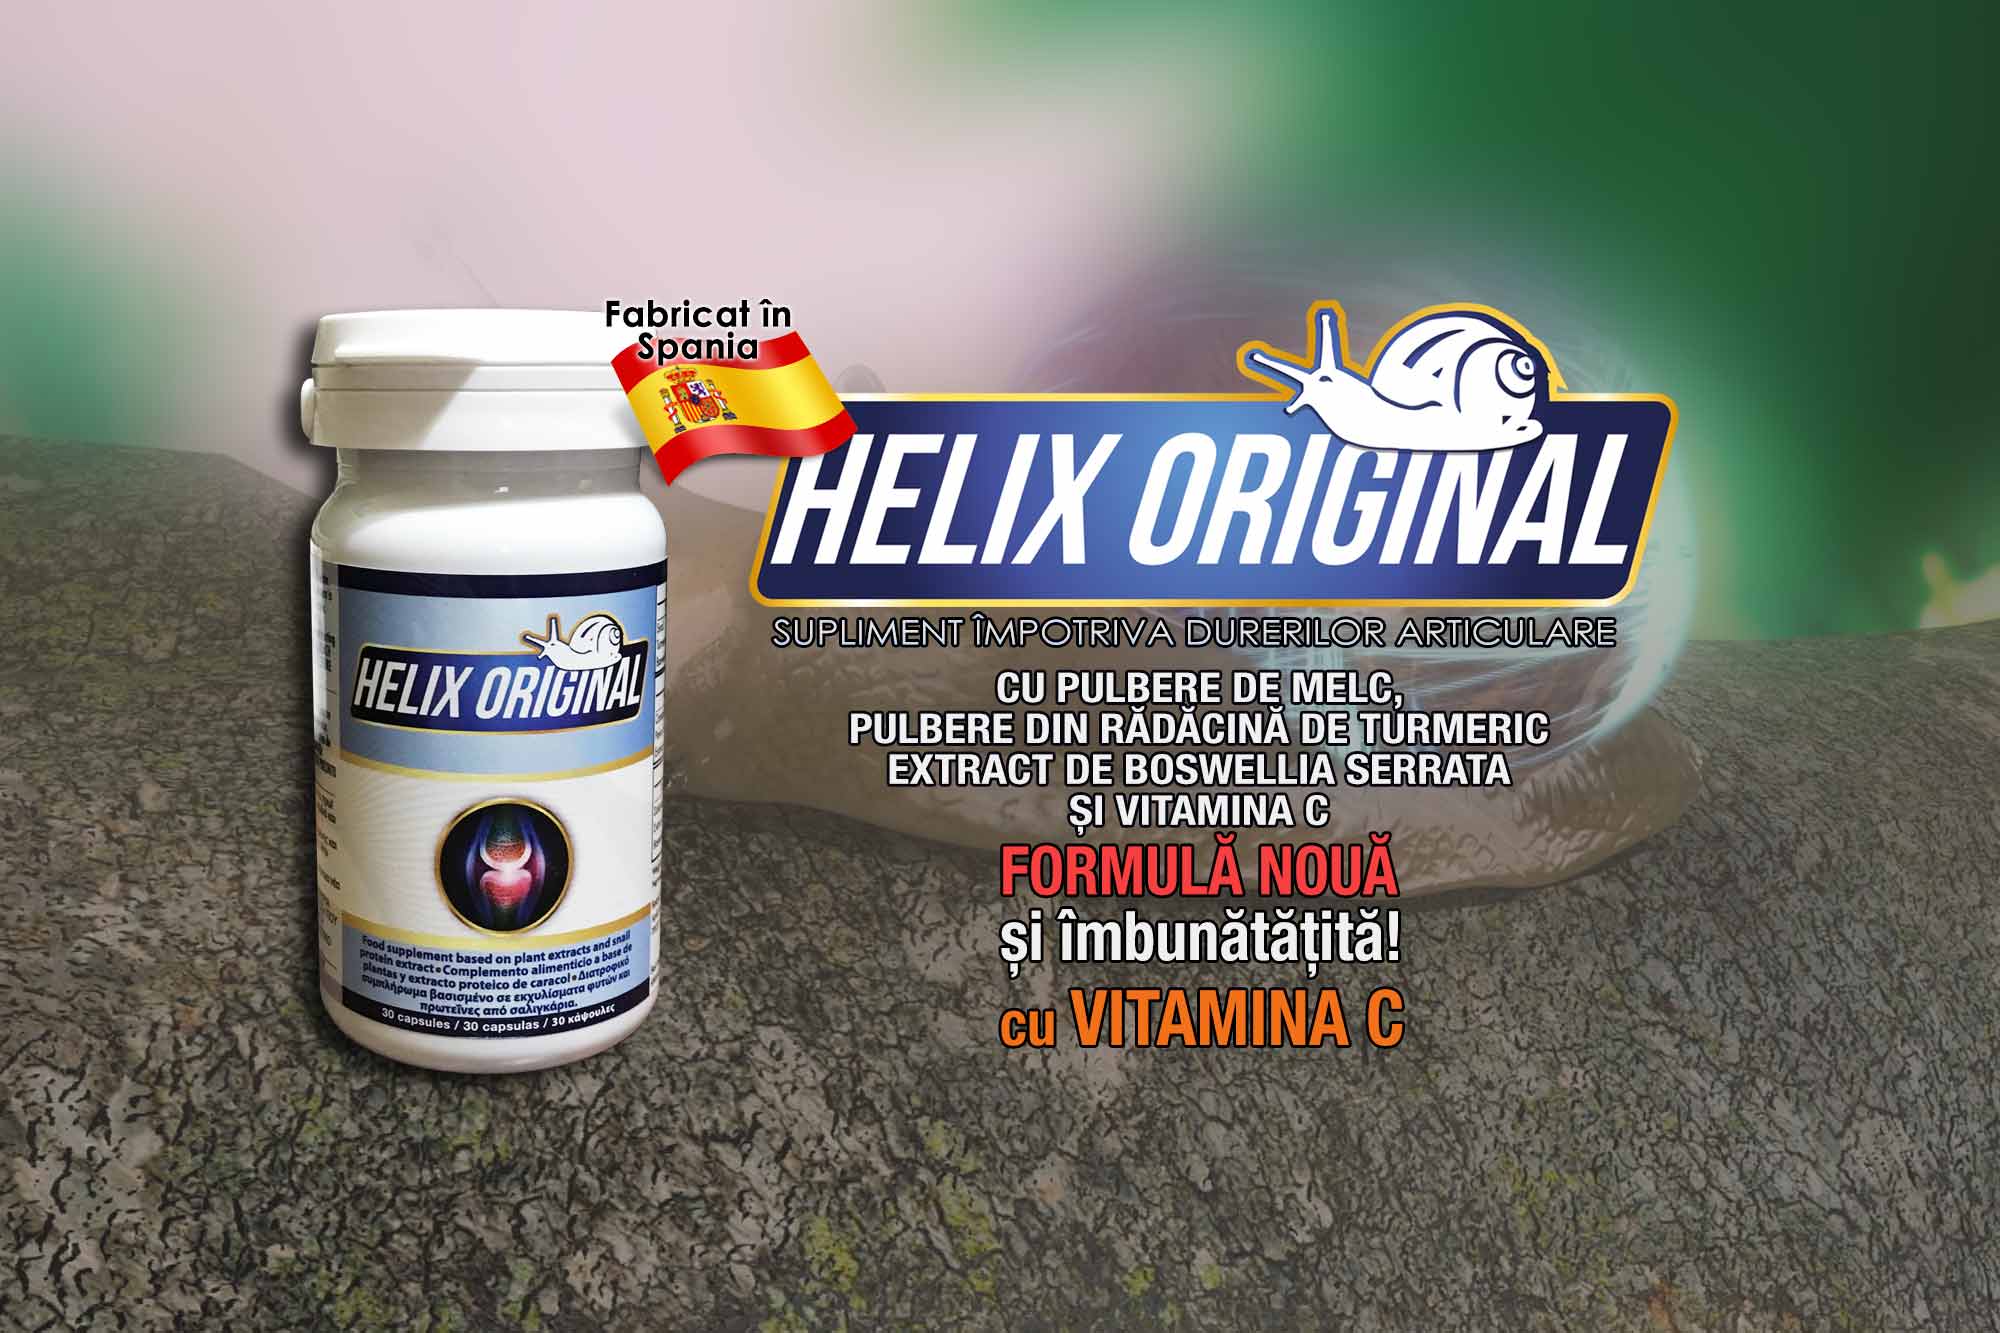 Helix Original